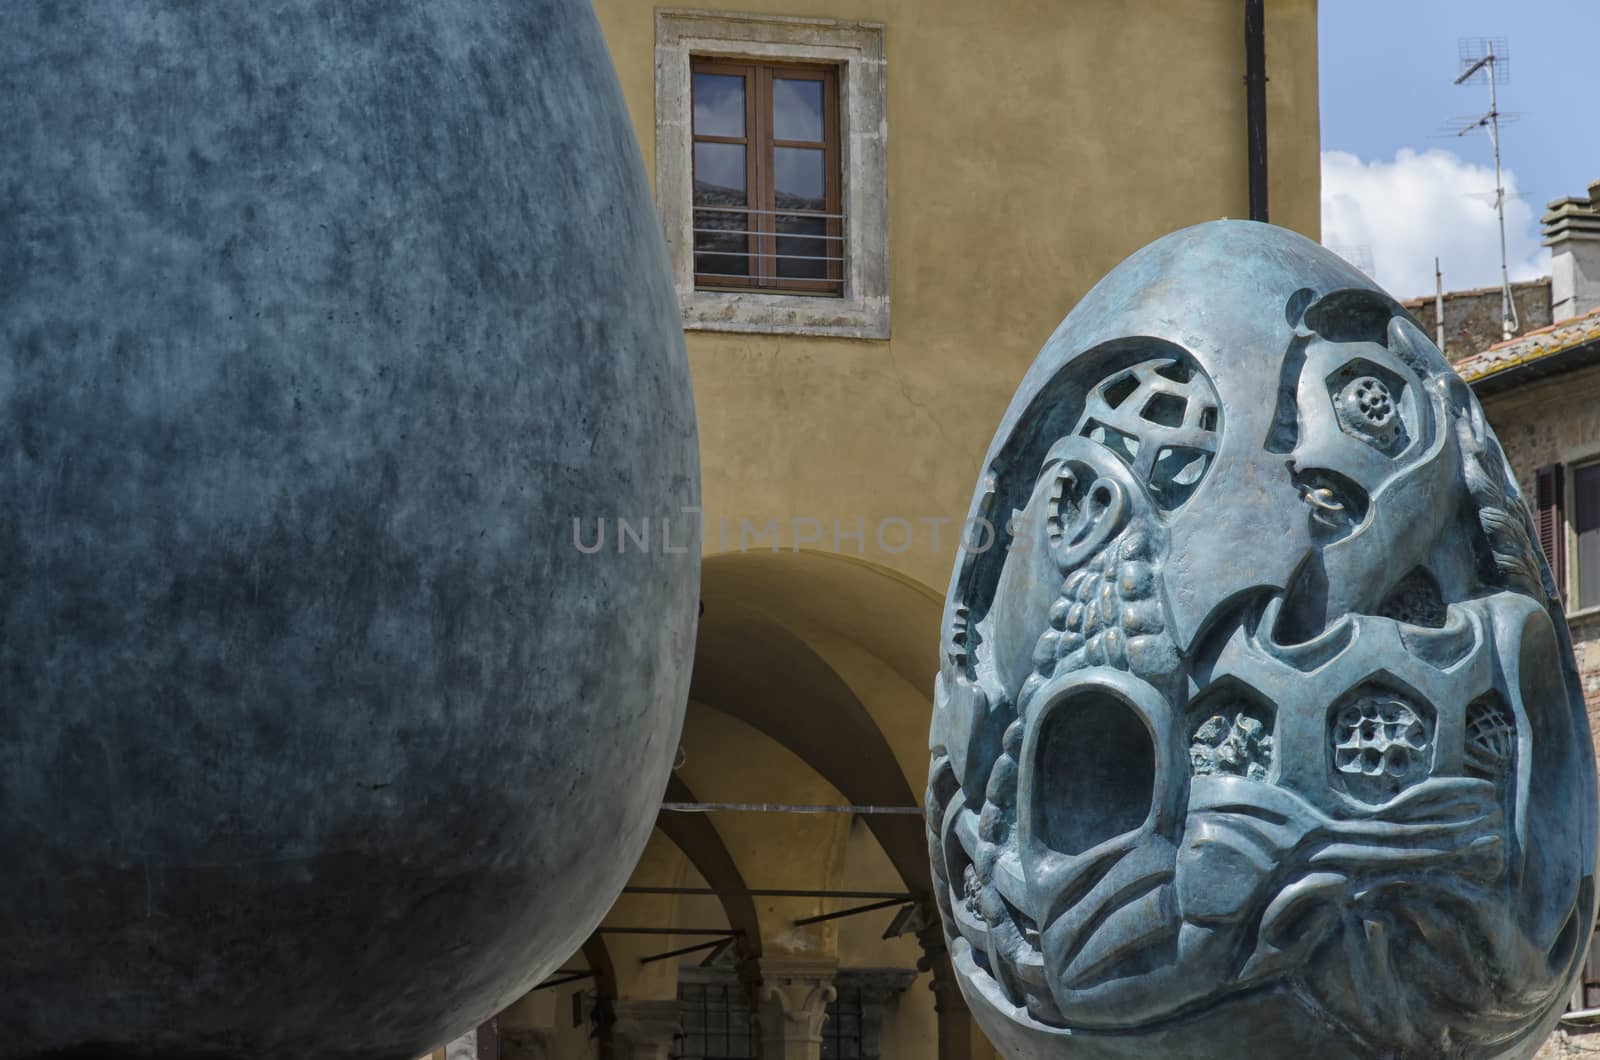 Exhibition of modern art in Volterra by sephirot17